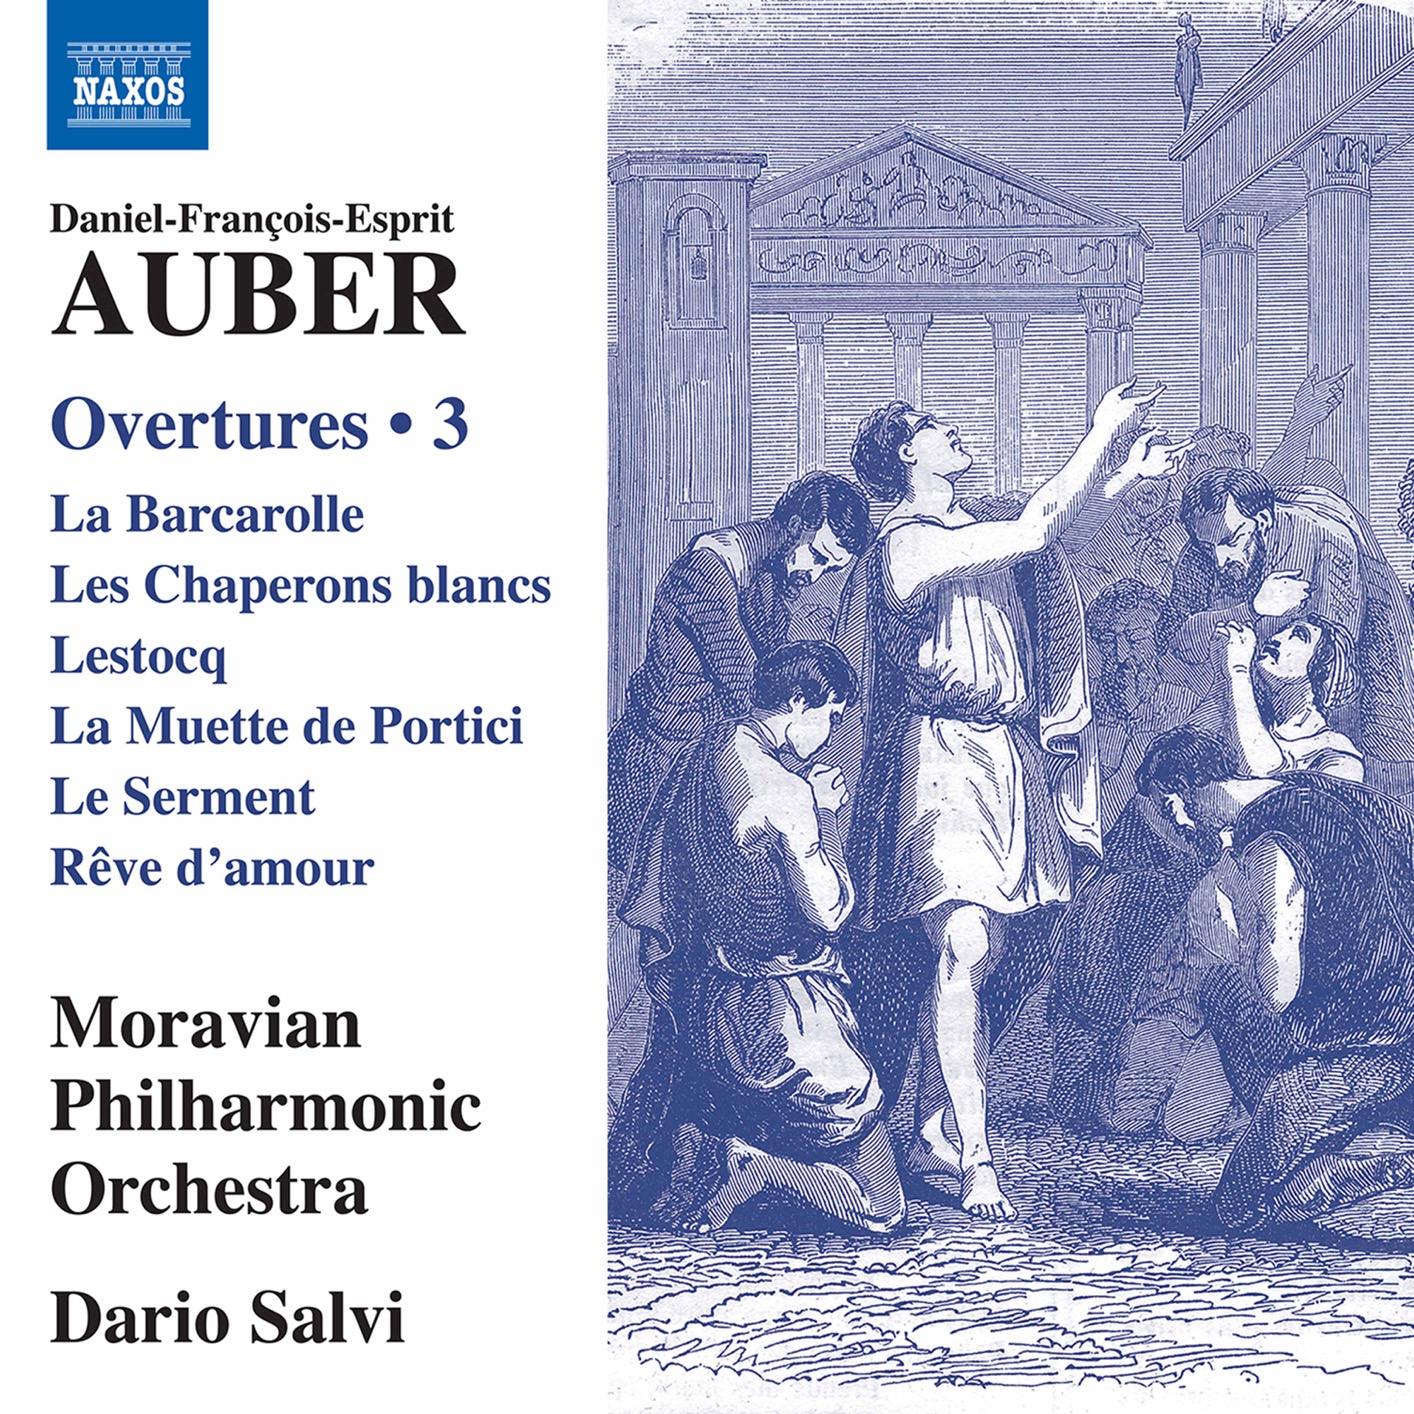 Moravian Philharmonic Orchestra, Dario Salvi - Auber Overtures, Vol. 3 (2021) [FLAC 24bit/96kHz]